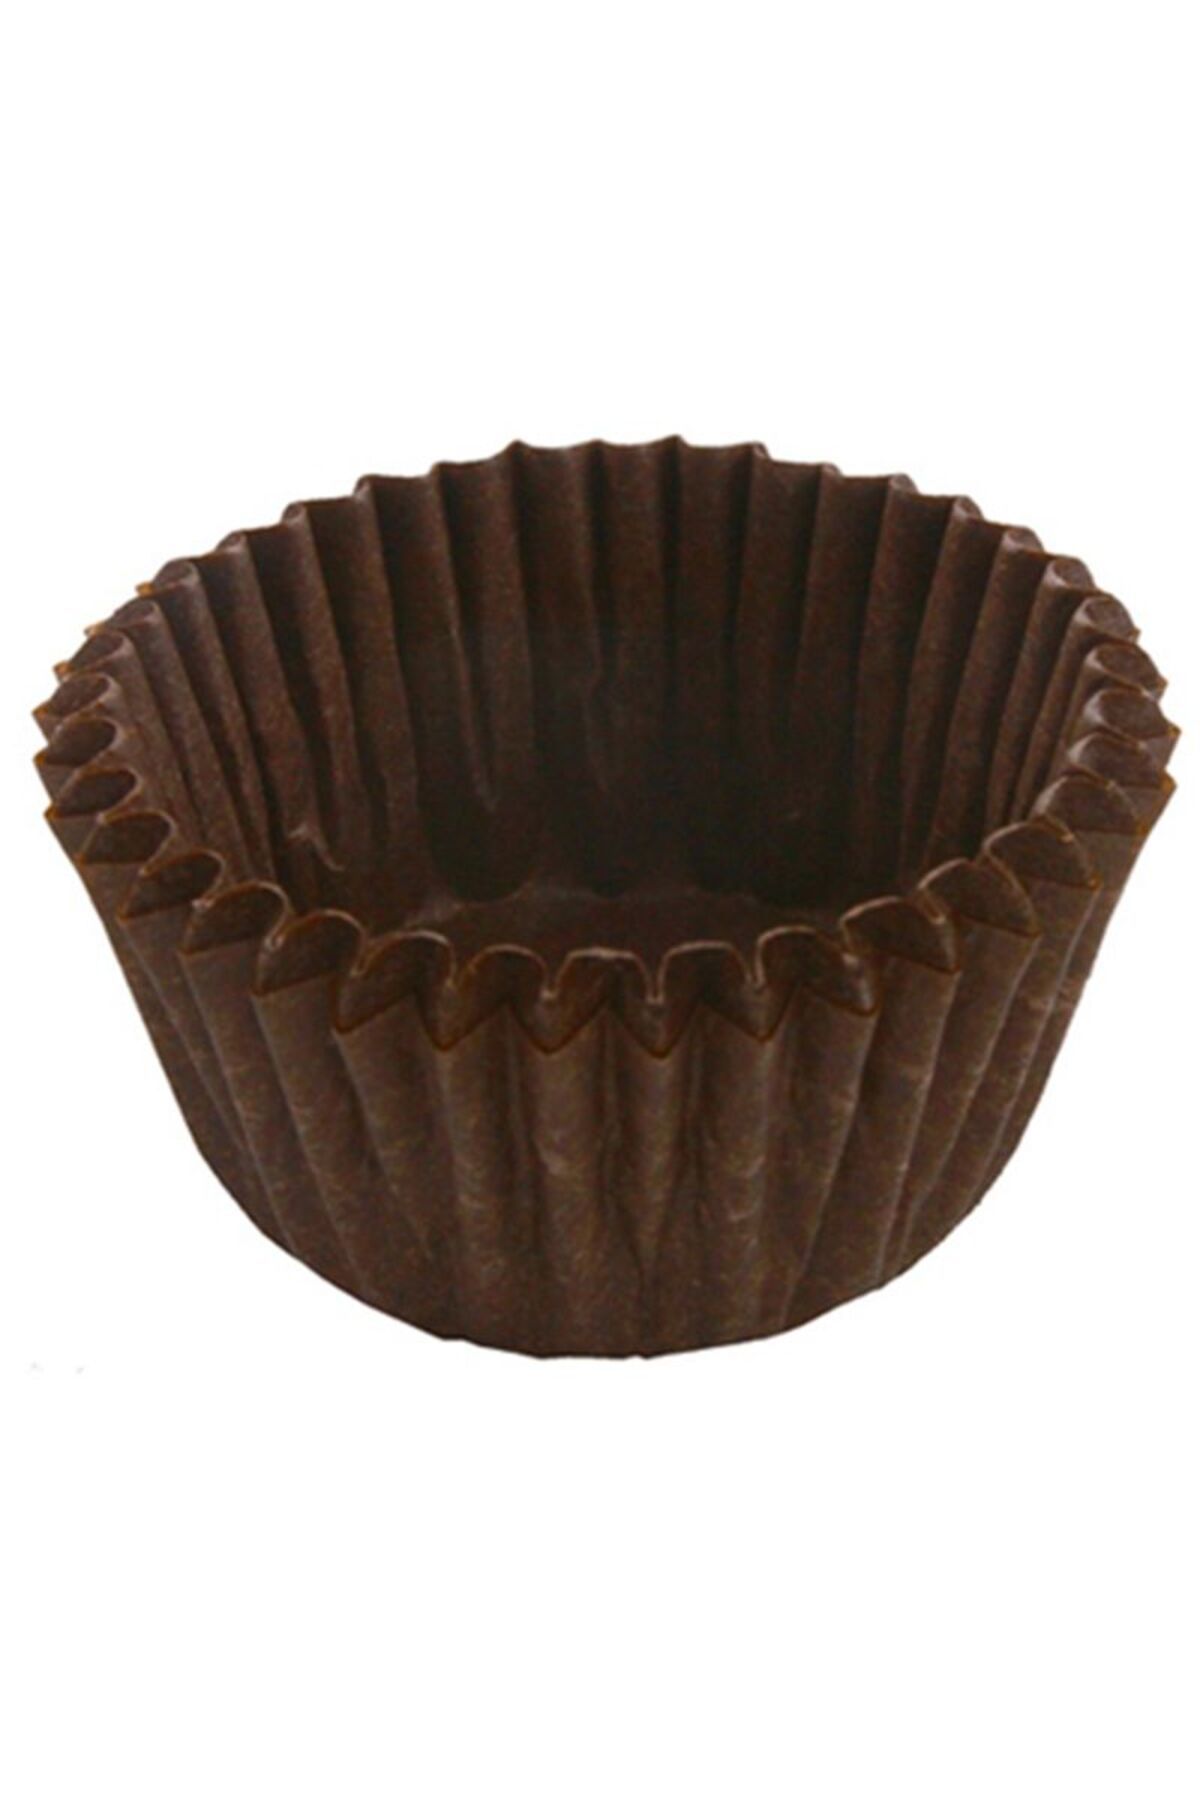 Pandoli Partidolu 100 Lü Muffin Cupcake Kek Kapsülü Kahve Renk